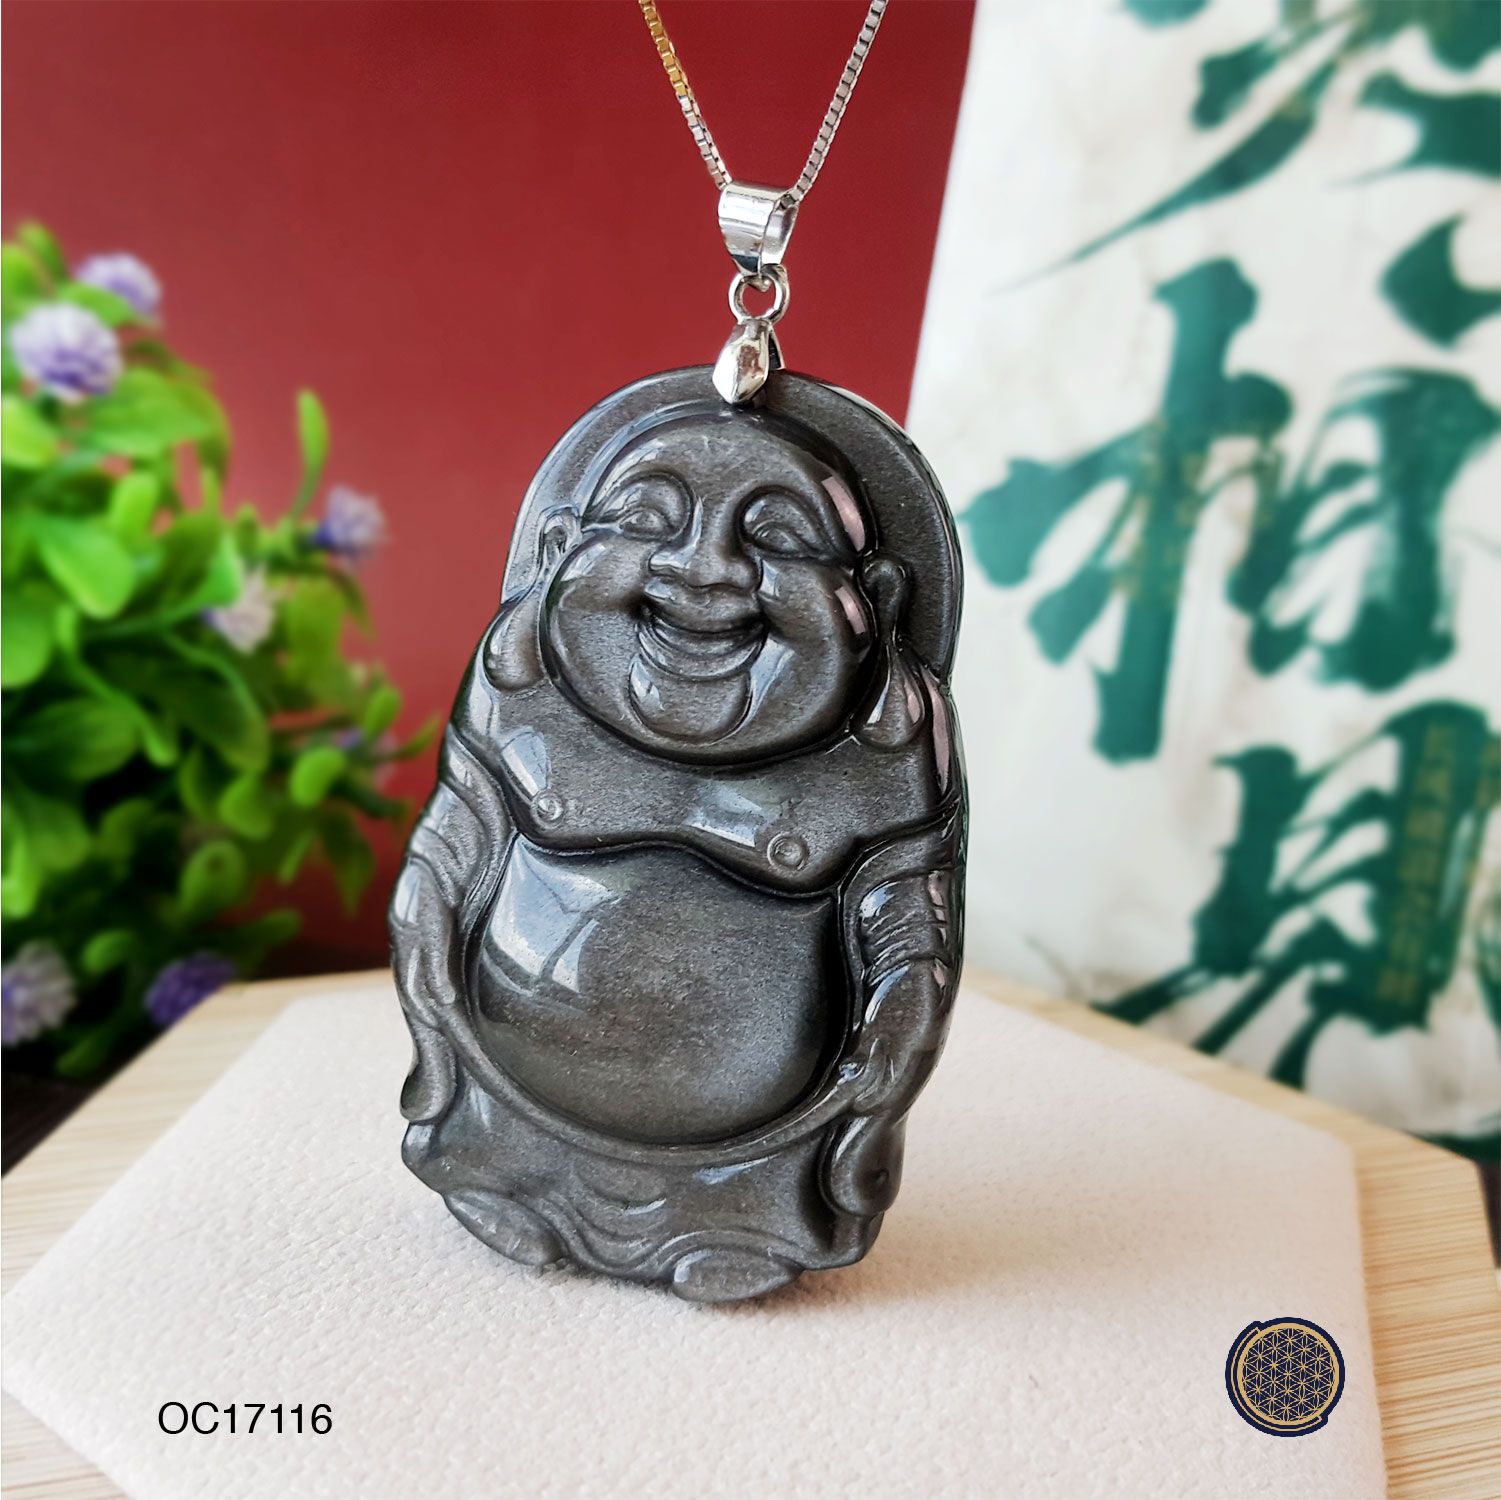 35mm x 55mm Silver Sheen Obsidian  Standing  Laughing Buddha Pendant